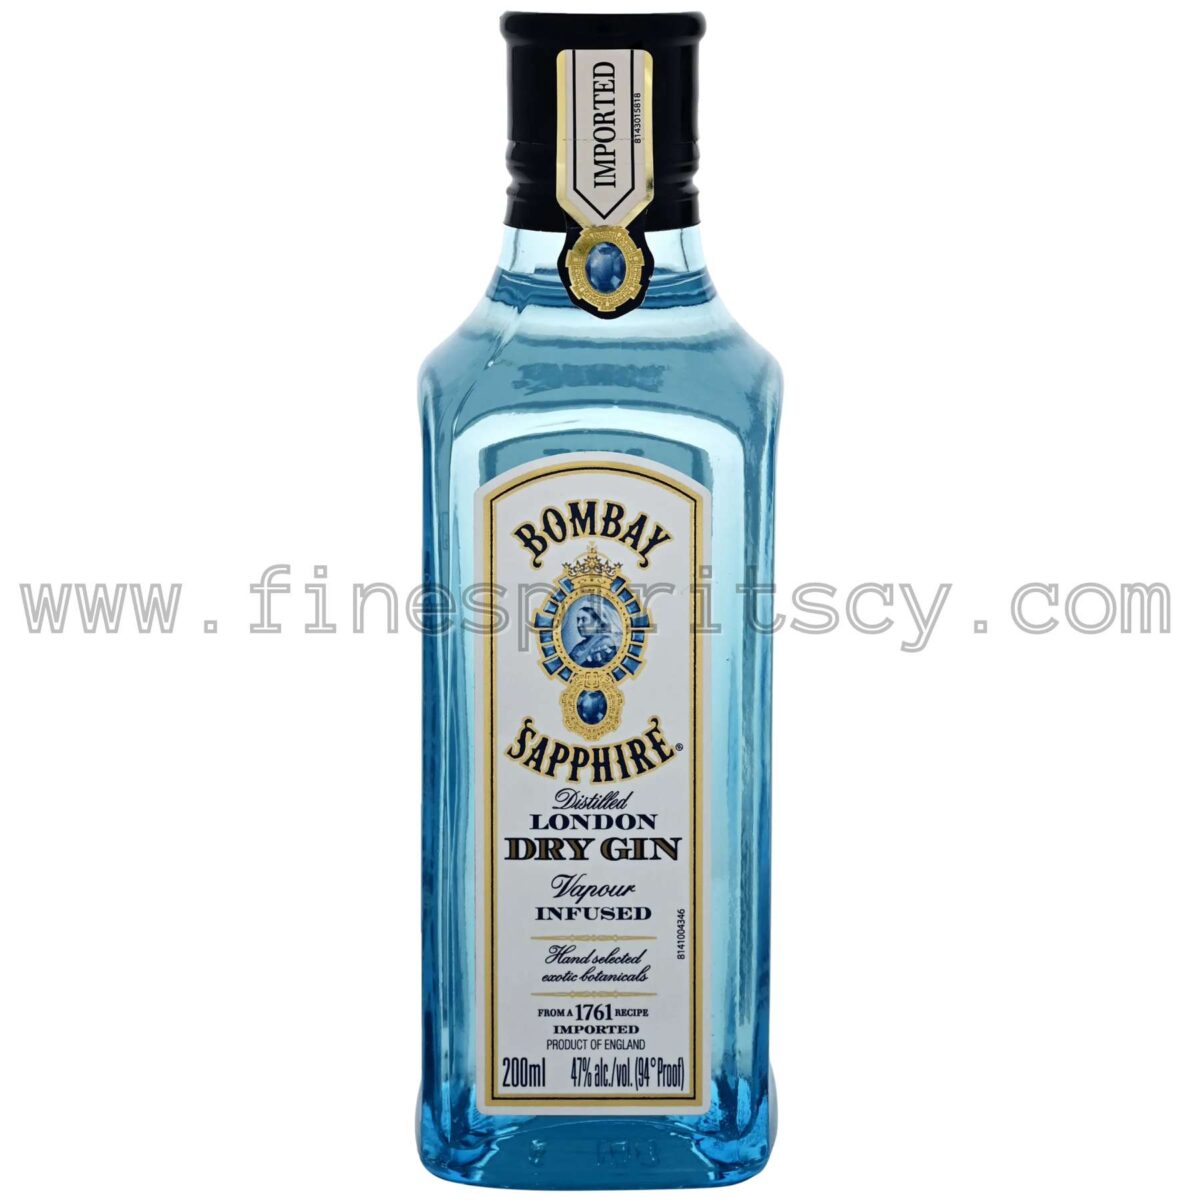 BOMBAY SAPPHIRE 200ML Gin 20cl 0.2L London Dry Gin Cyprus 47% price fscy order online